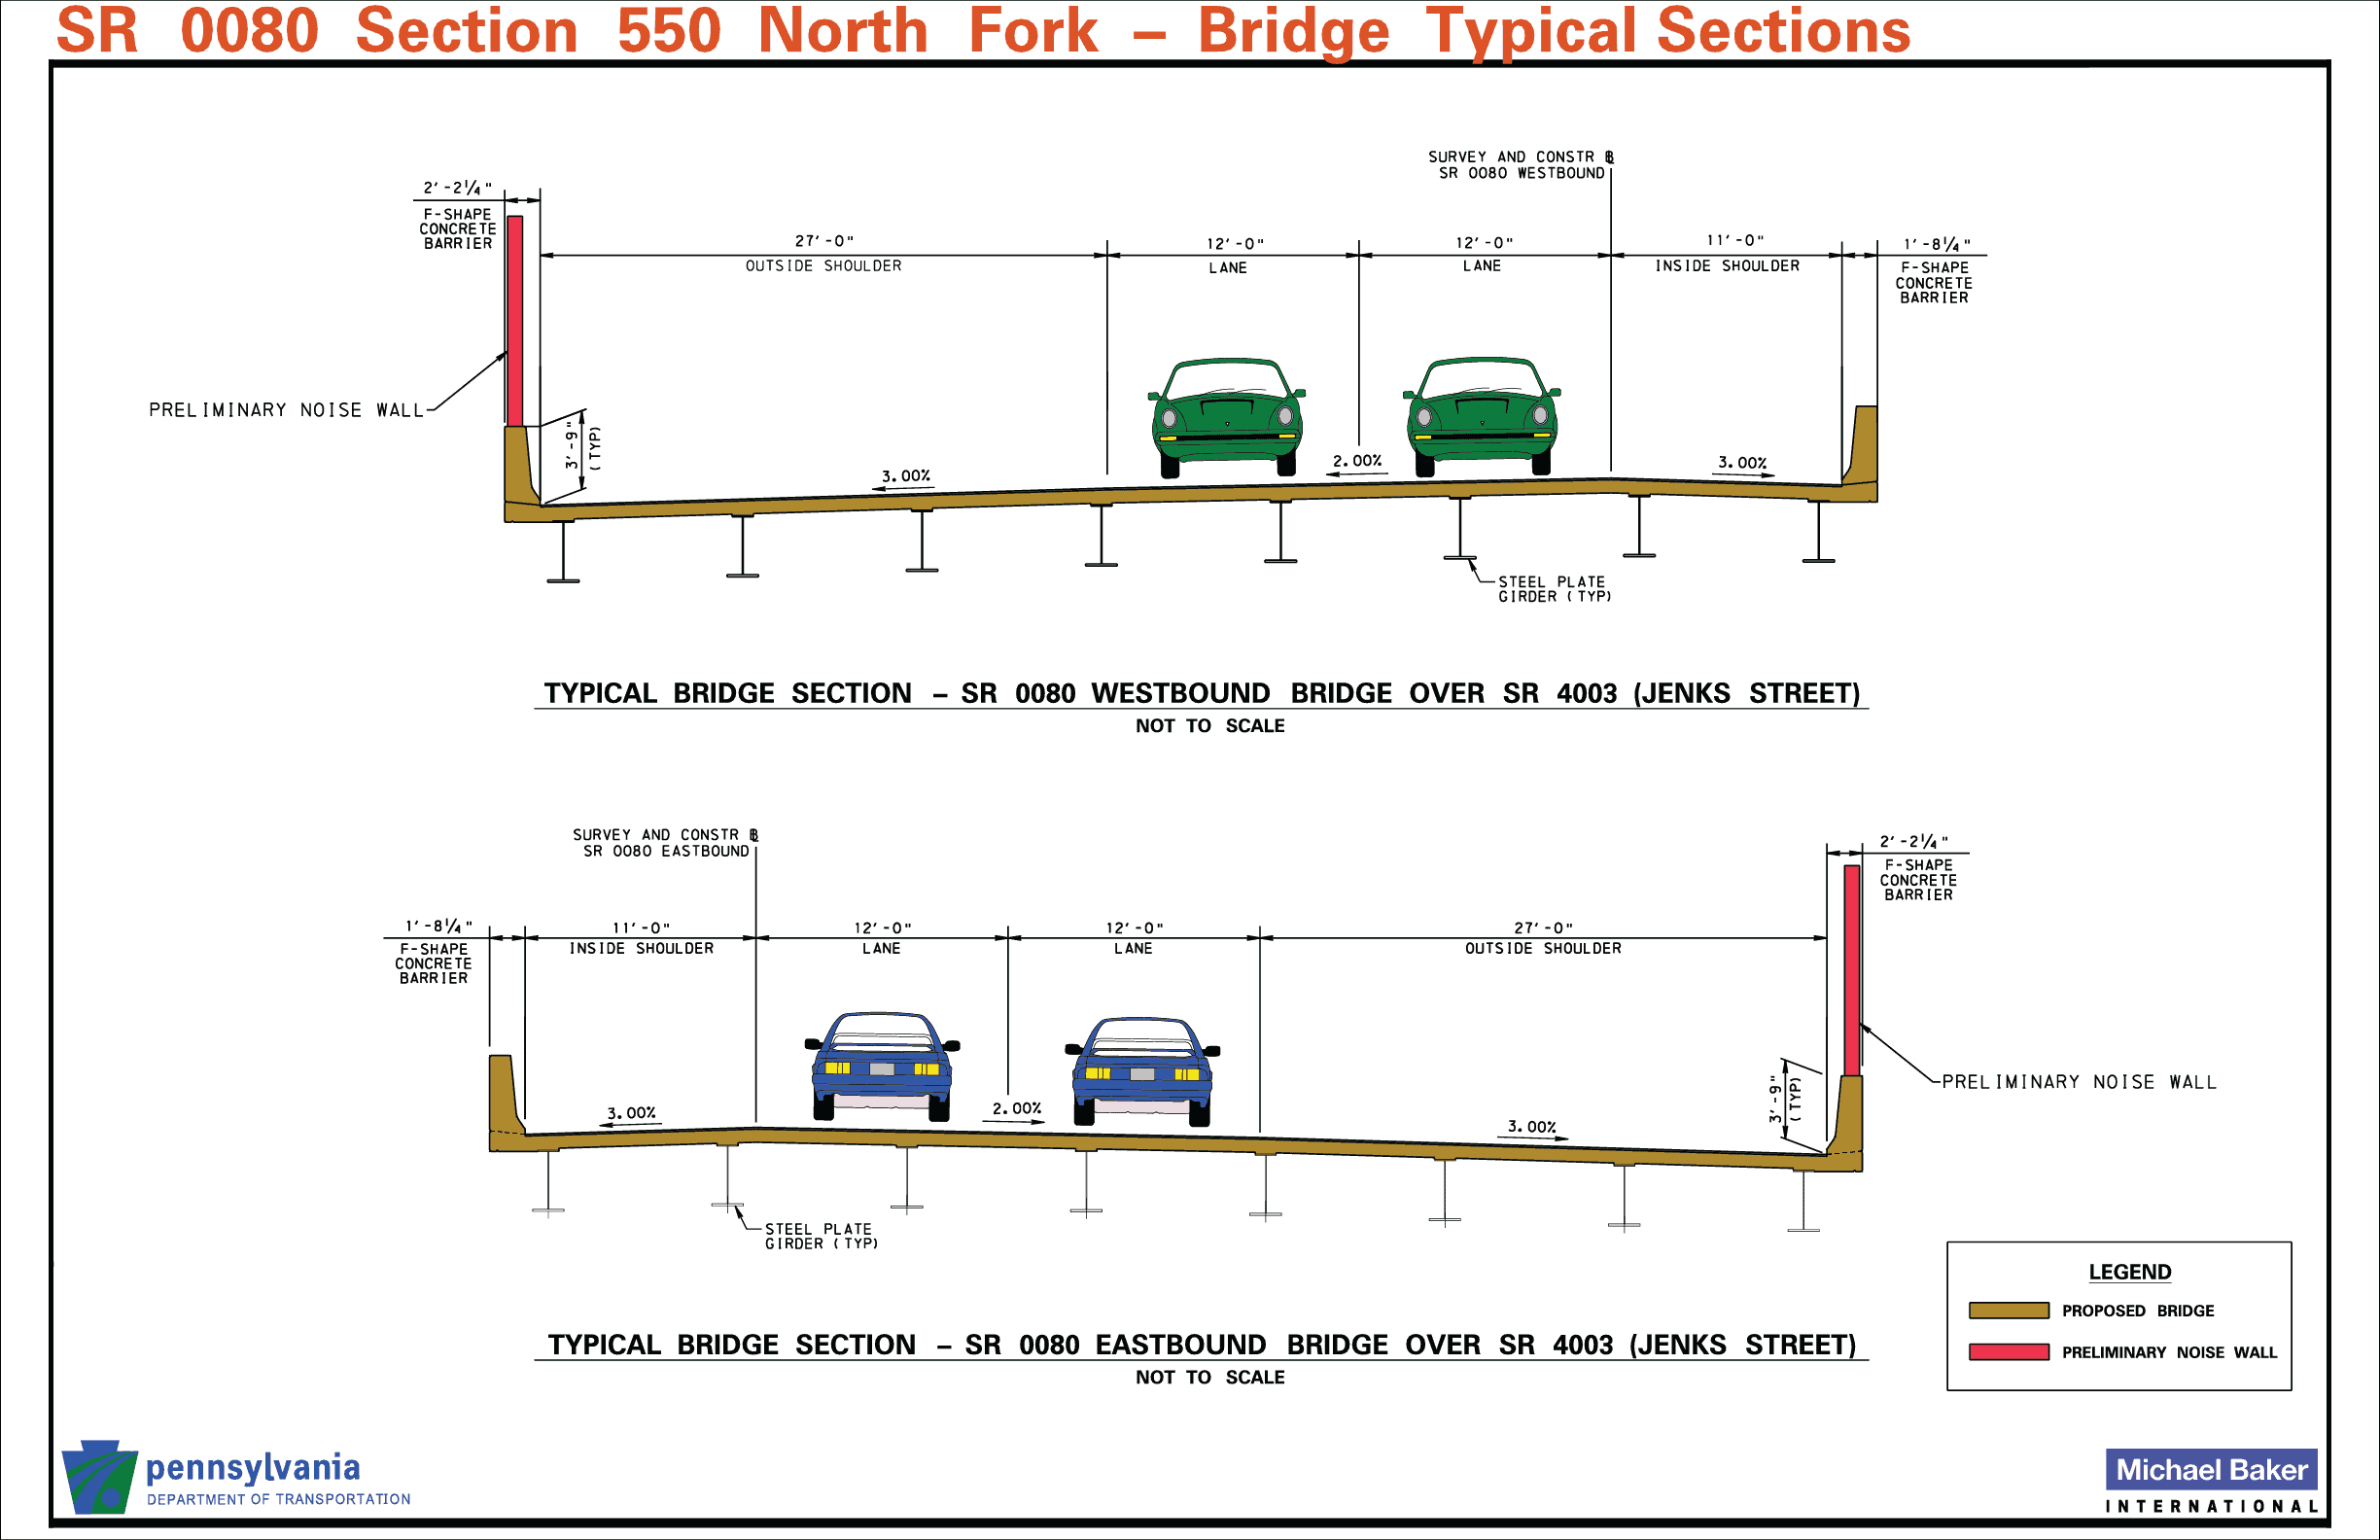 I-80 Typical Bridge Sections